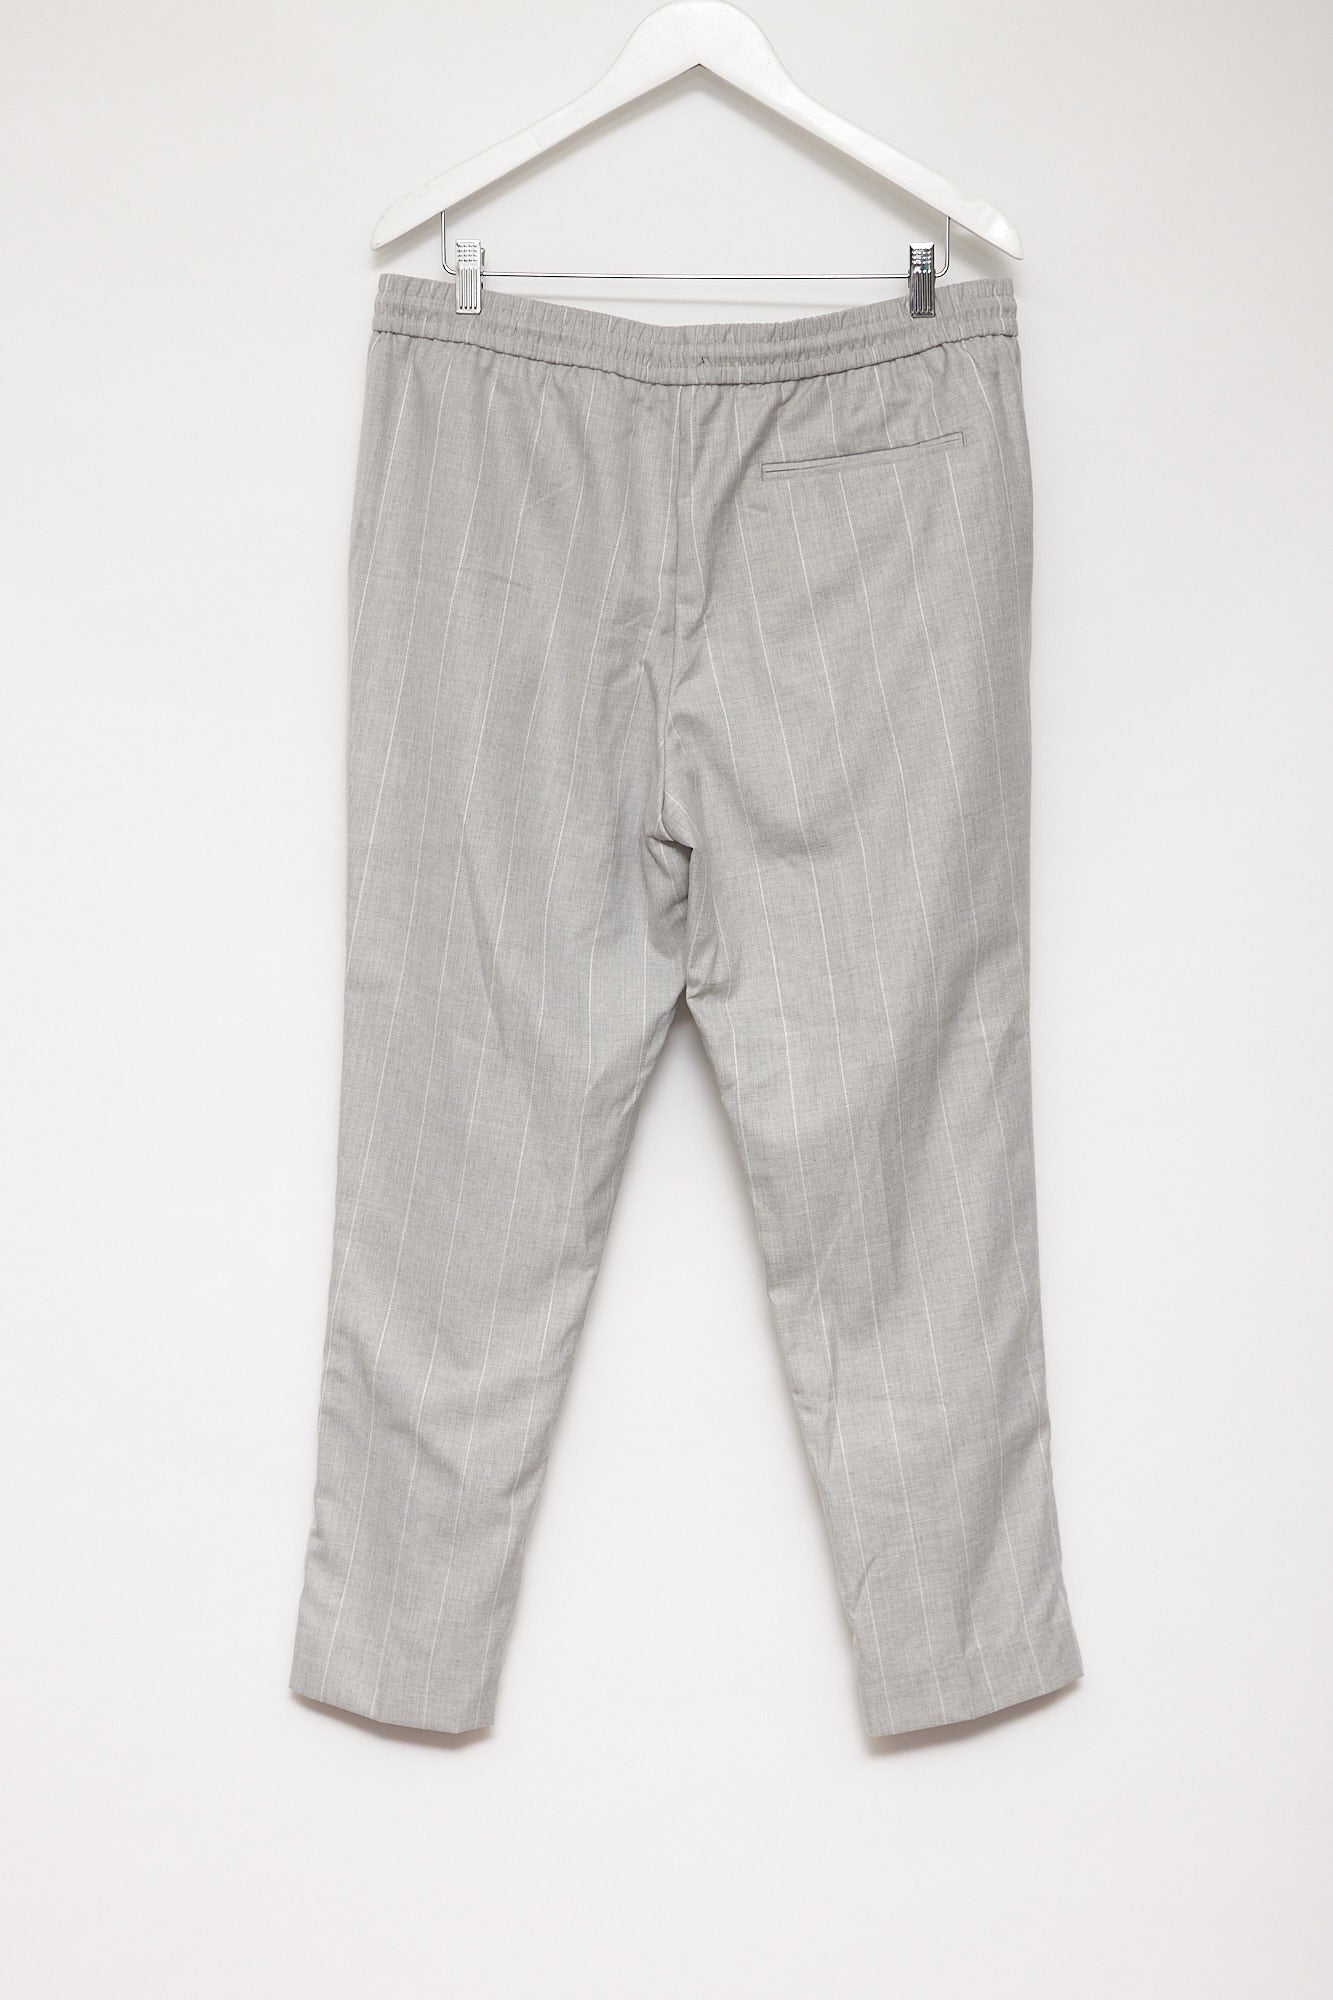 Mens Grey Drawstring Trouser size Large